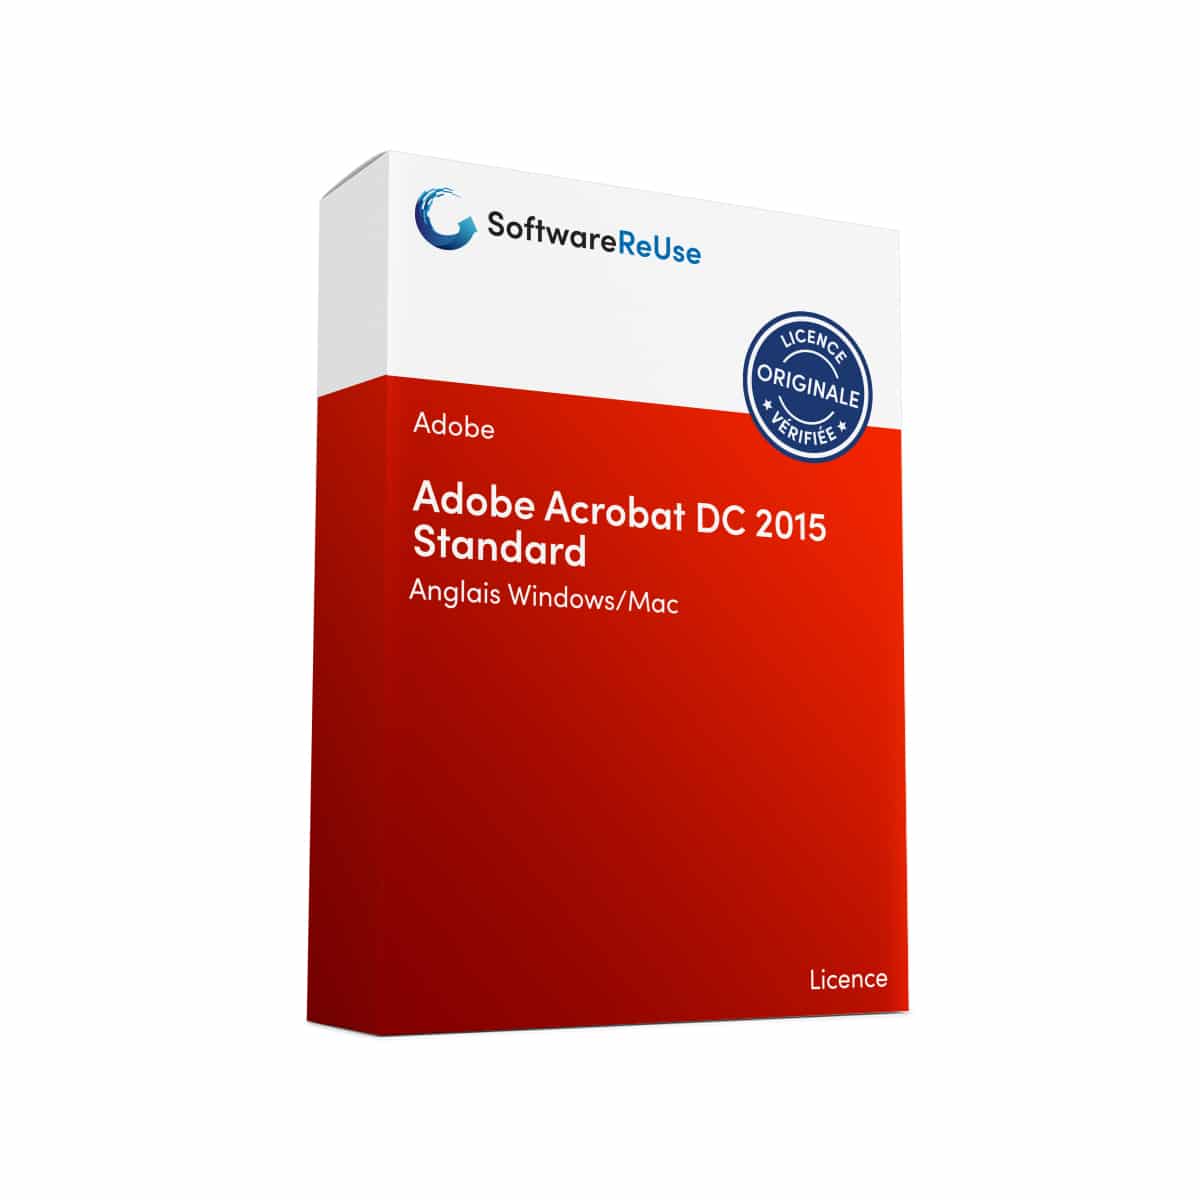 Adobe Acrobat DC 2015 Standard 2